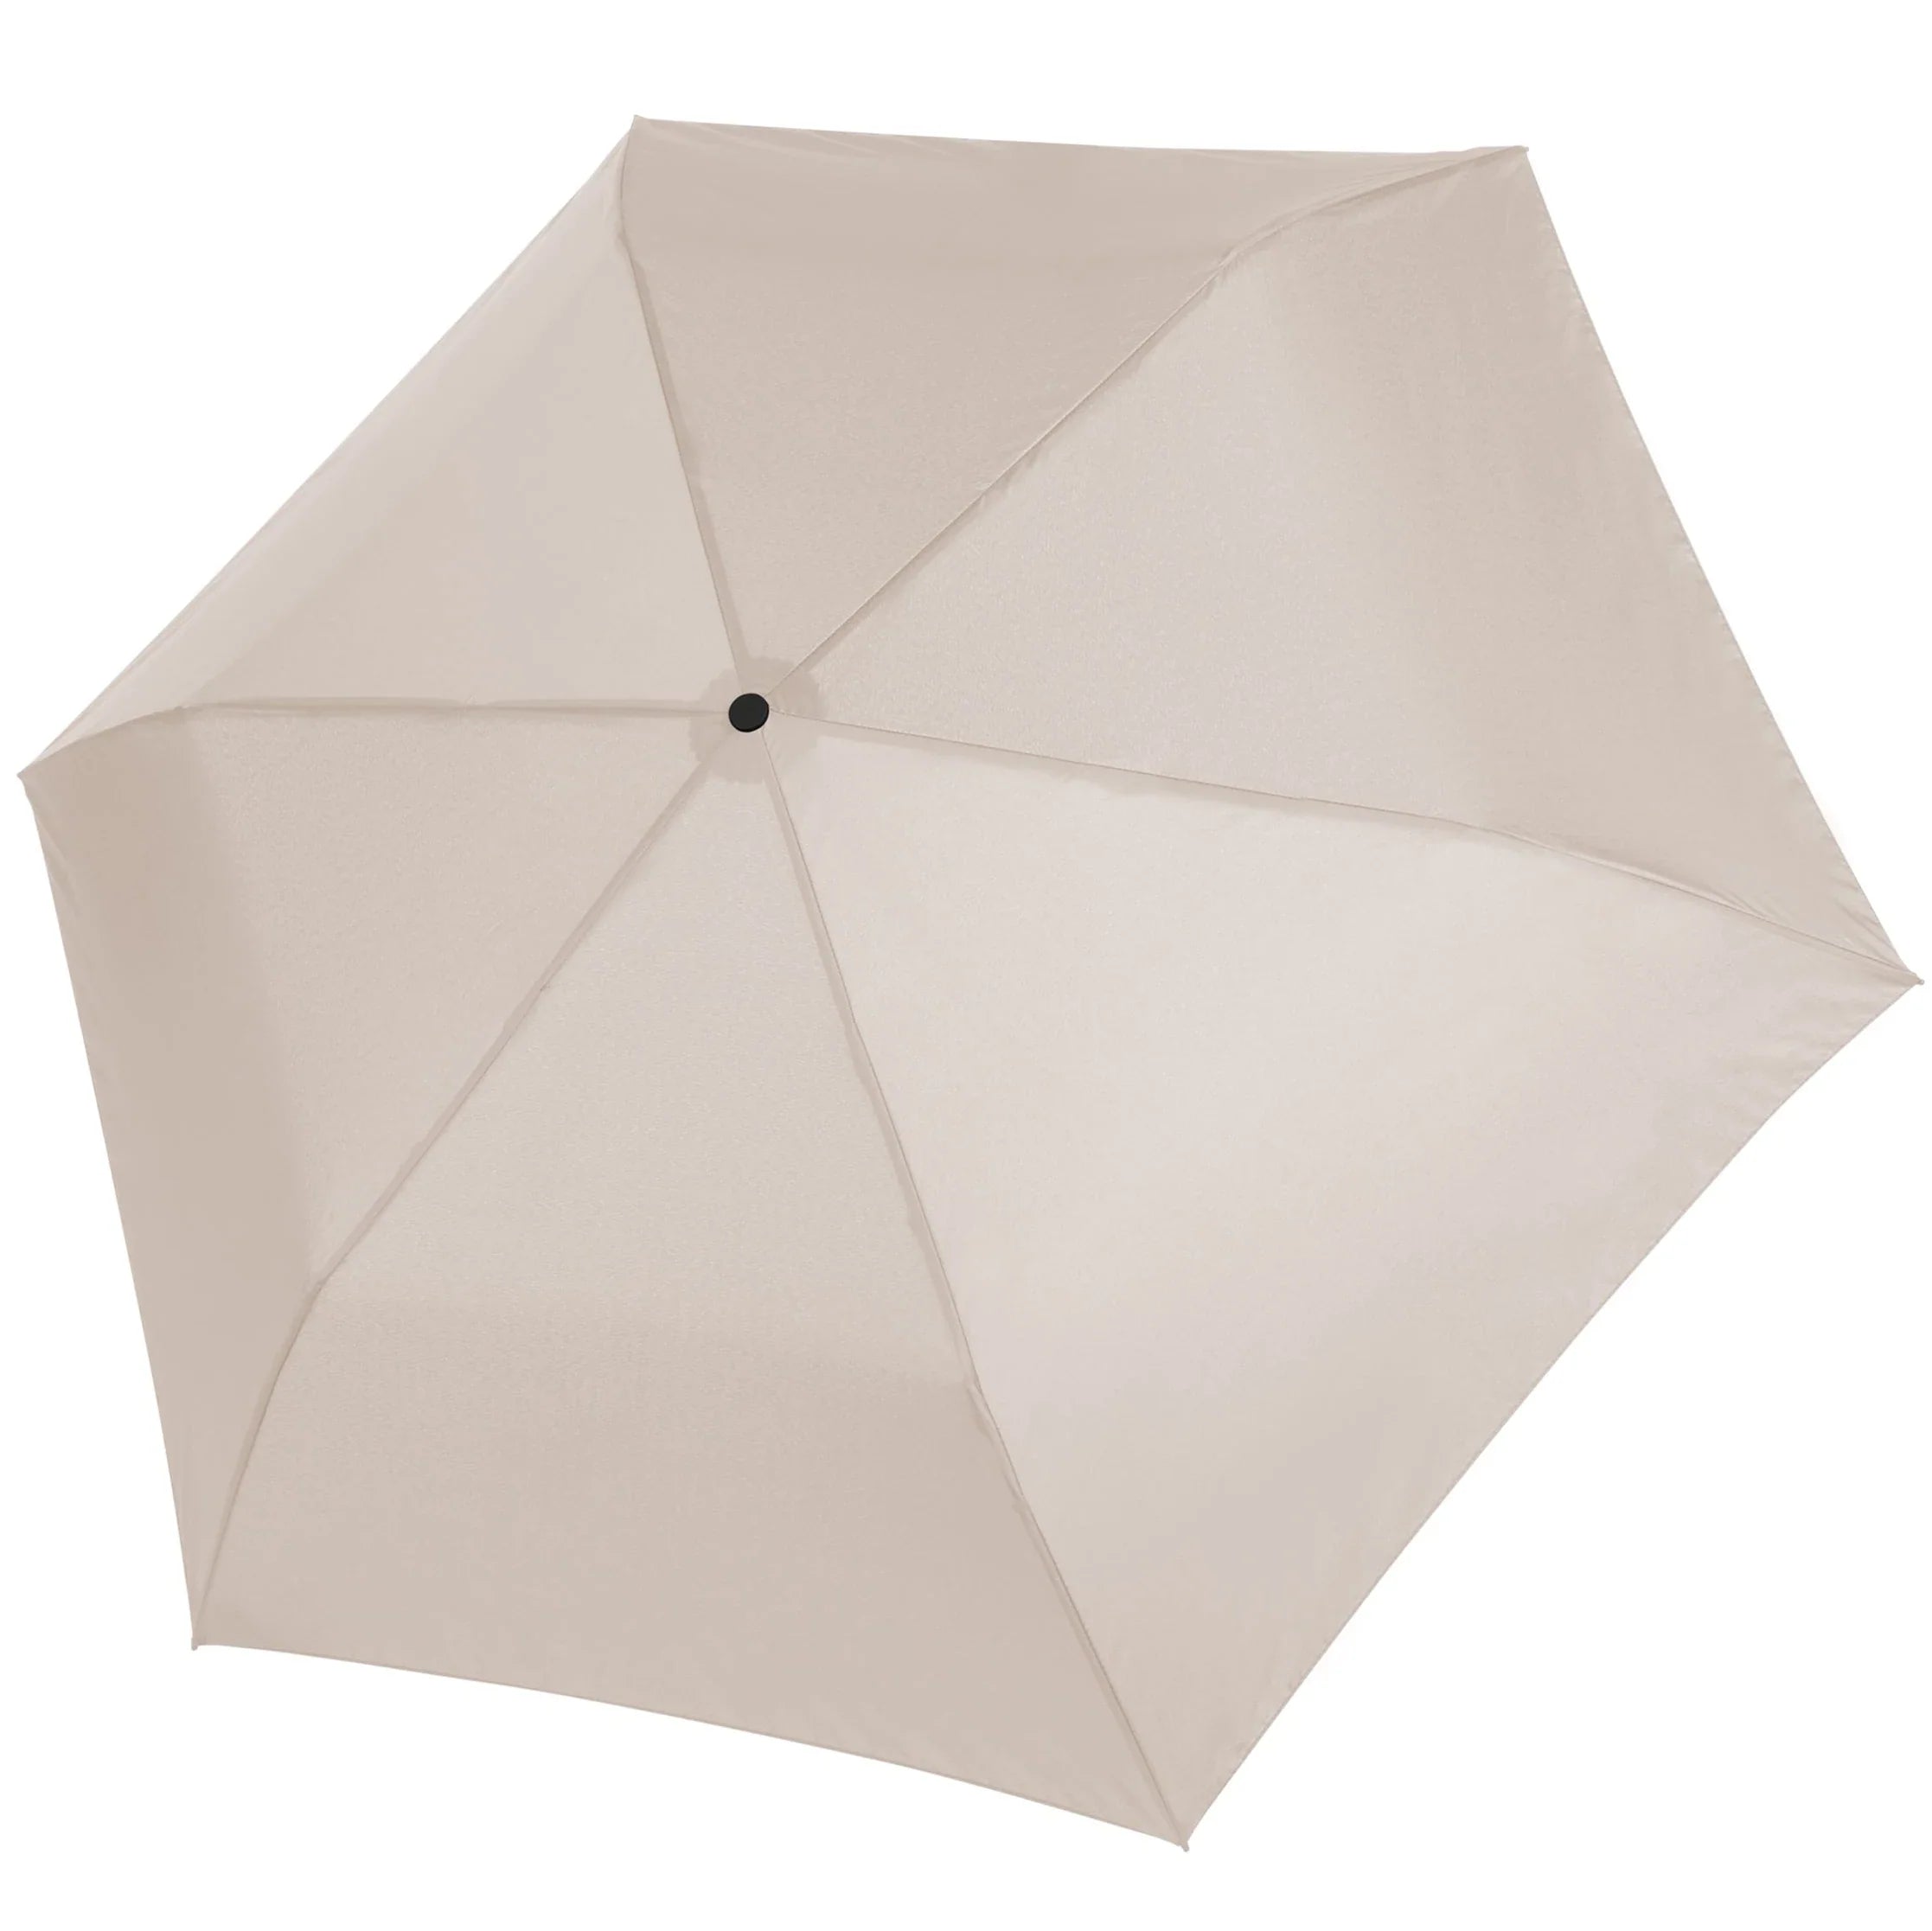 umbrellas Doppler pocket 21 - Zero99 cm umbrella pocket black